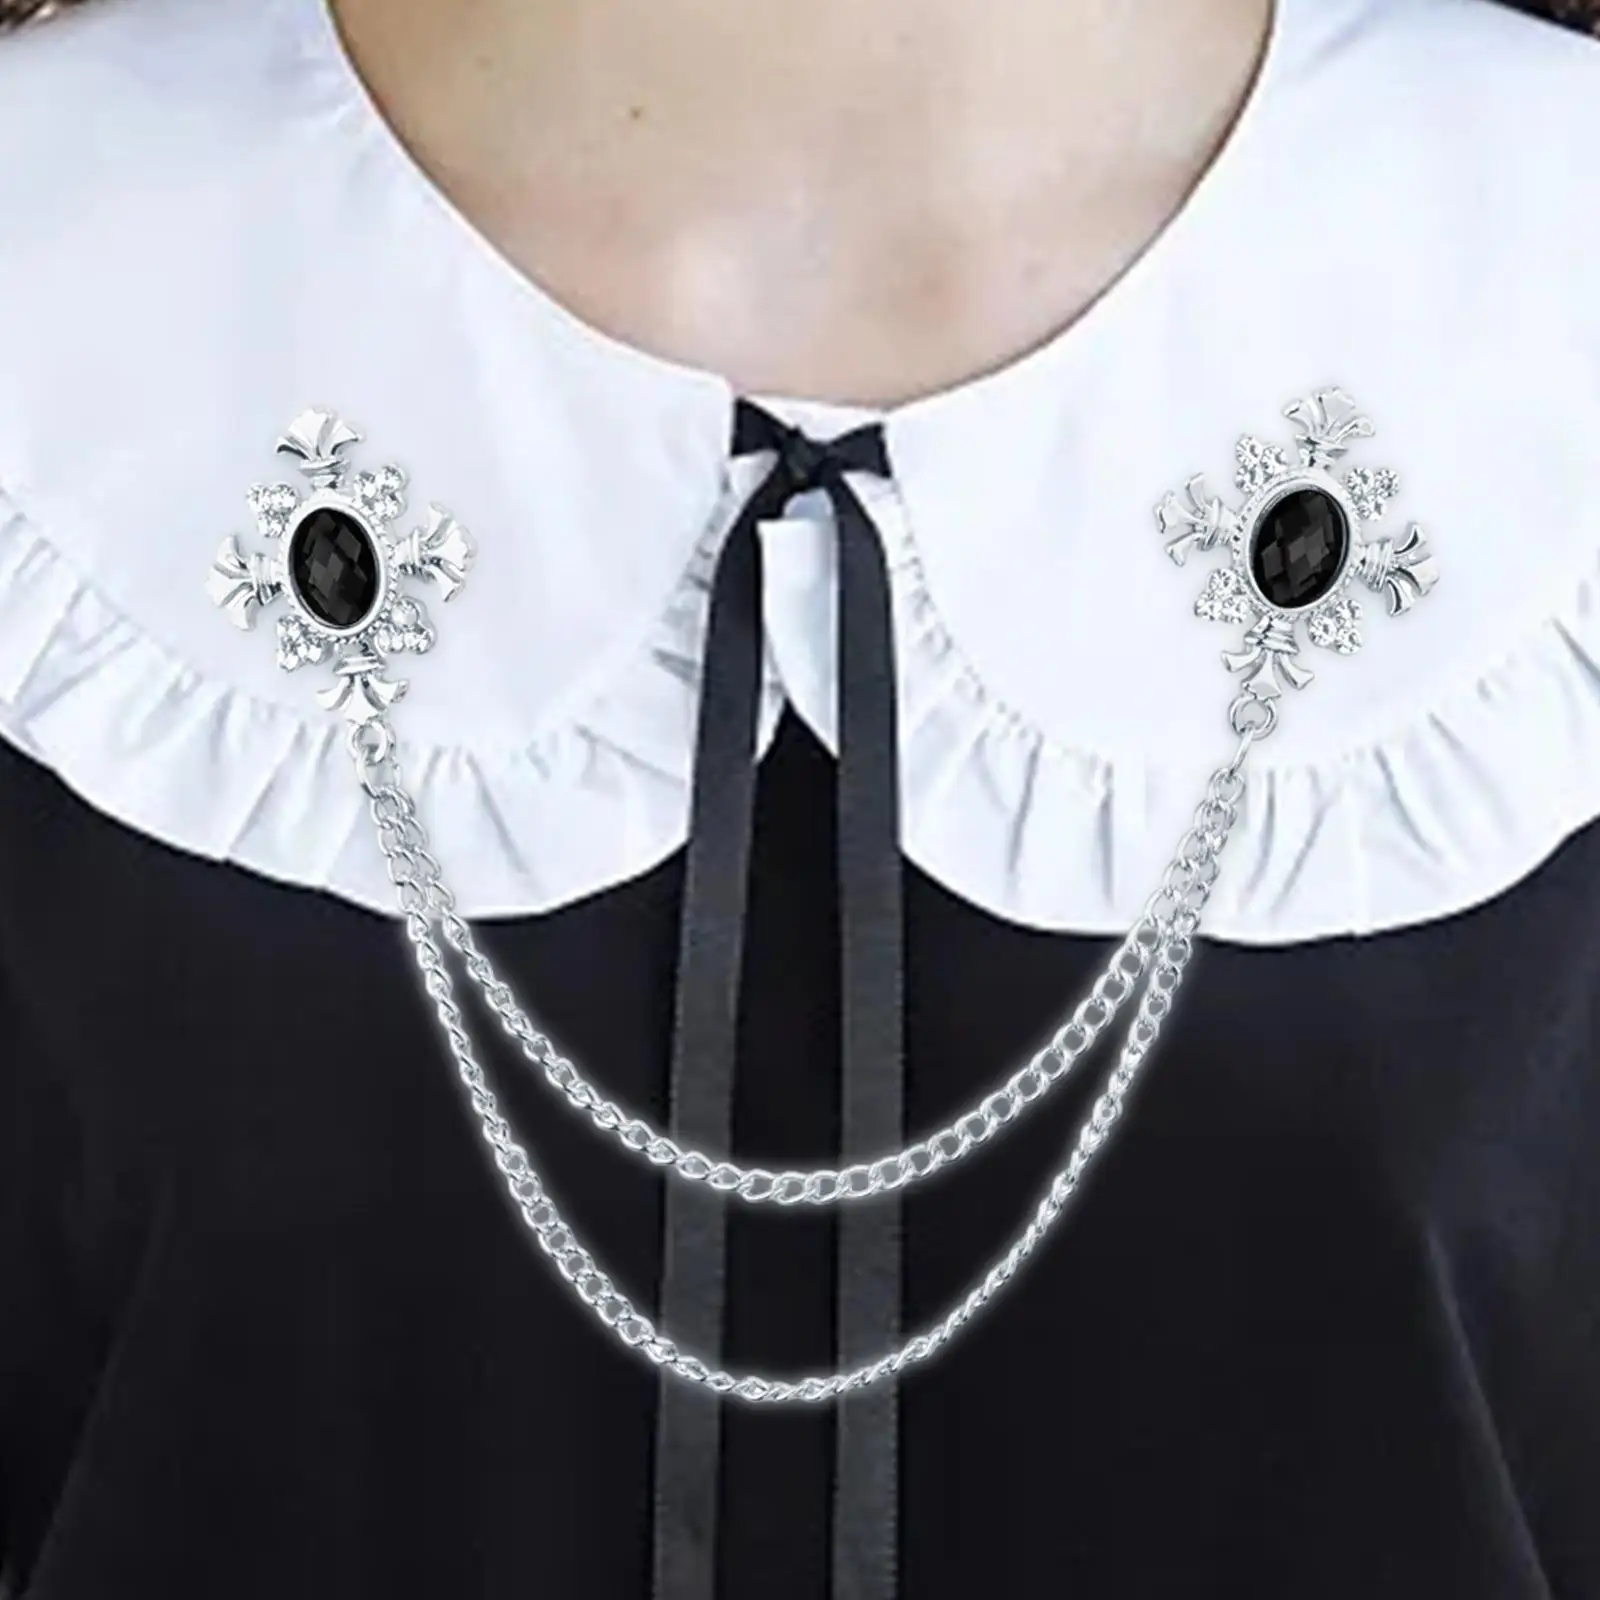 2xMen`s Brooch Lapel Fashion Women Rhinestone Chain Brooch for Shirts Coat Tie Silver Black